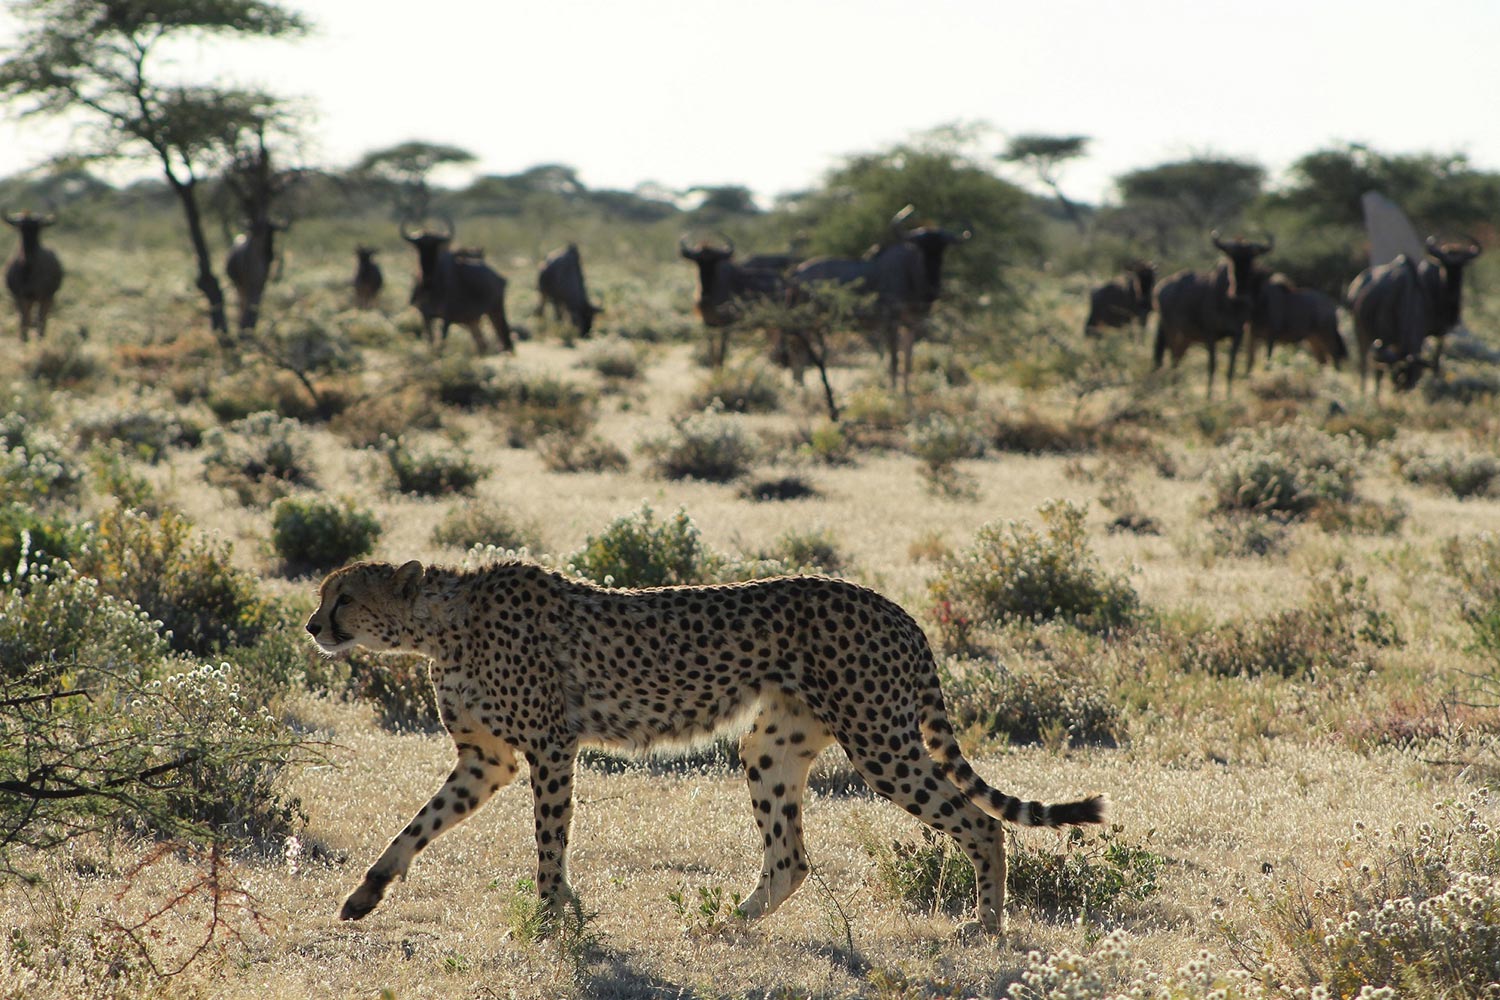 Cheetah and Wildebeests